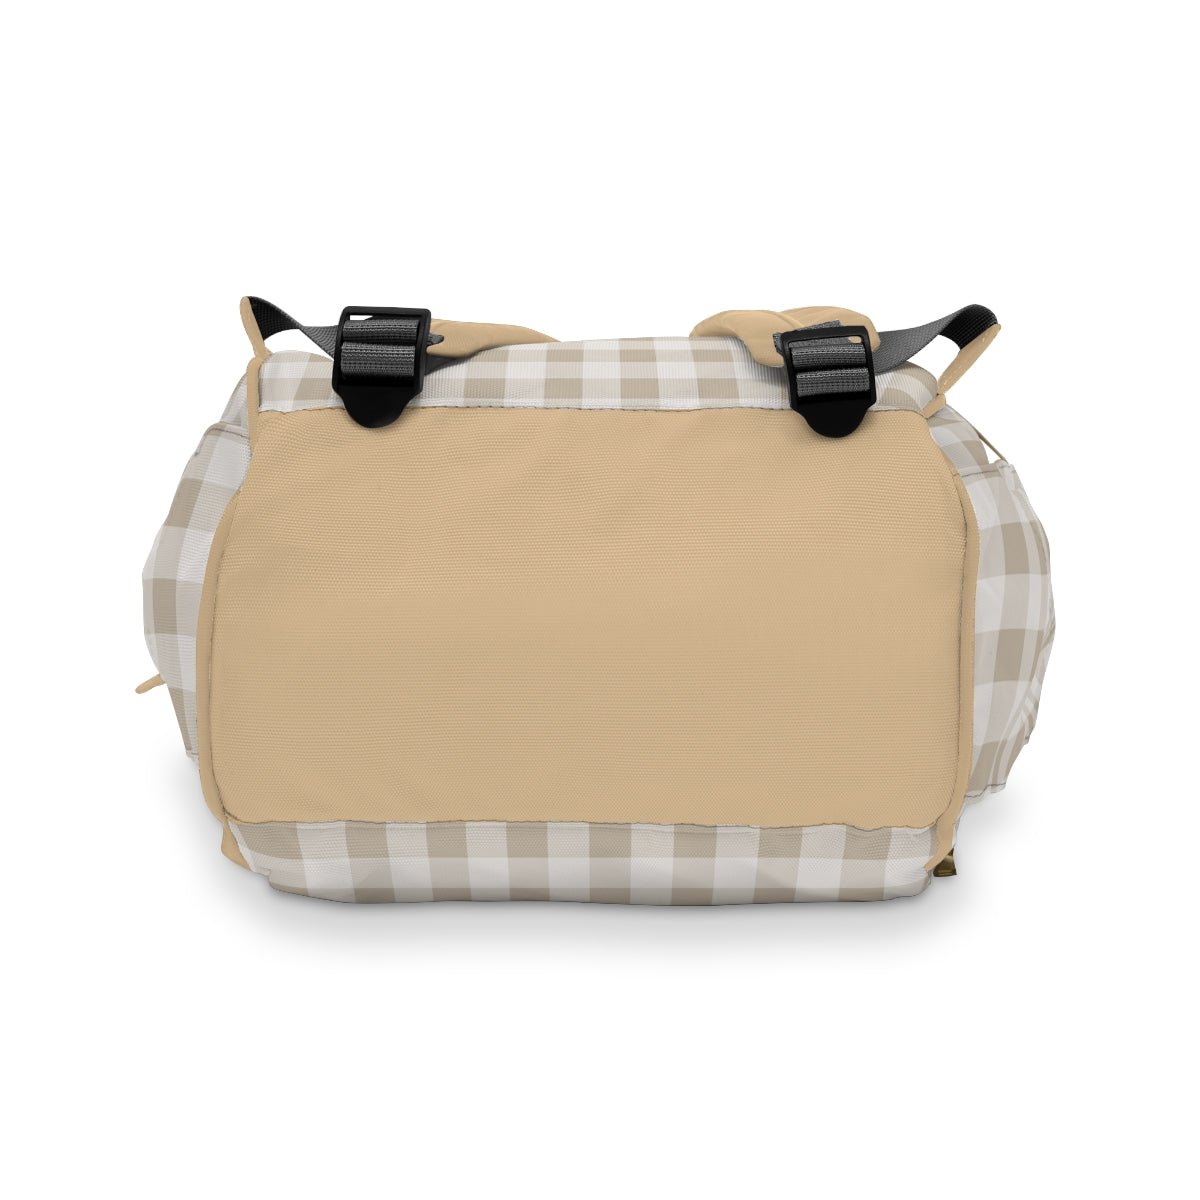 Backpack Bag in Charlie Checkers - Modern Kastle Shop